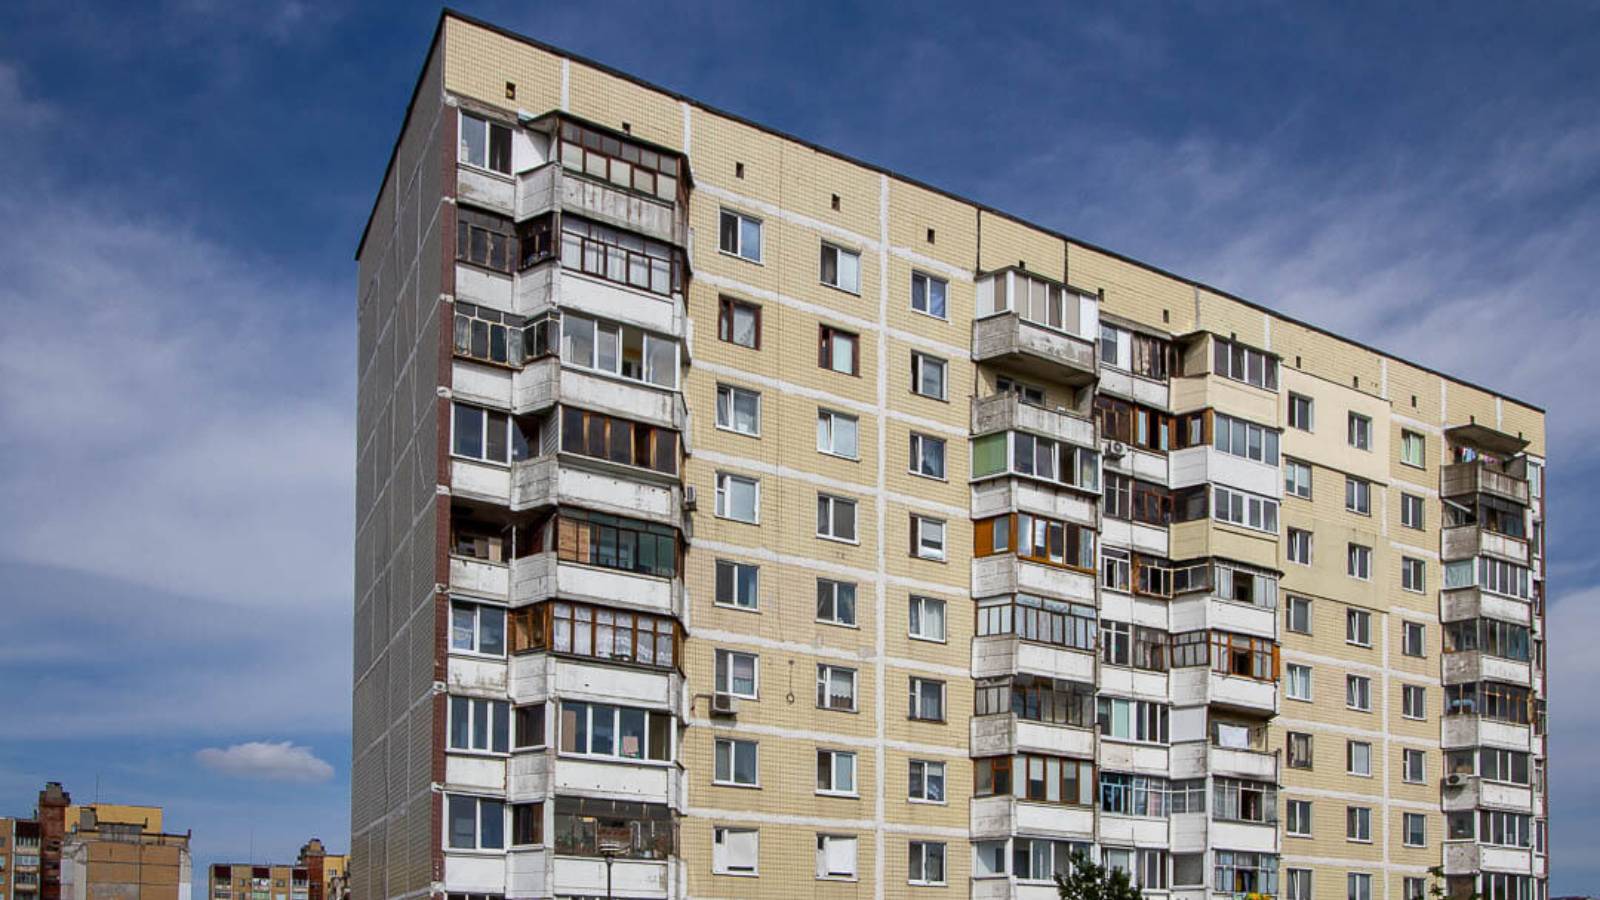 VIDEO Chernihiv Ukraine Housing Block Hit by Russian Missile